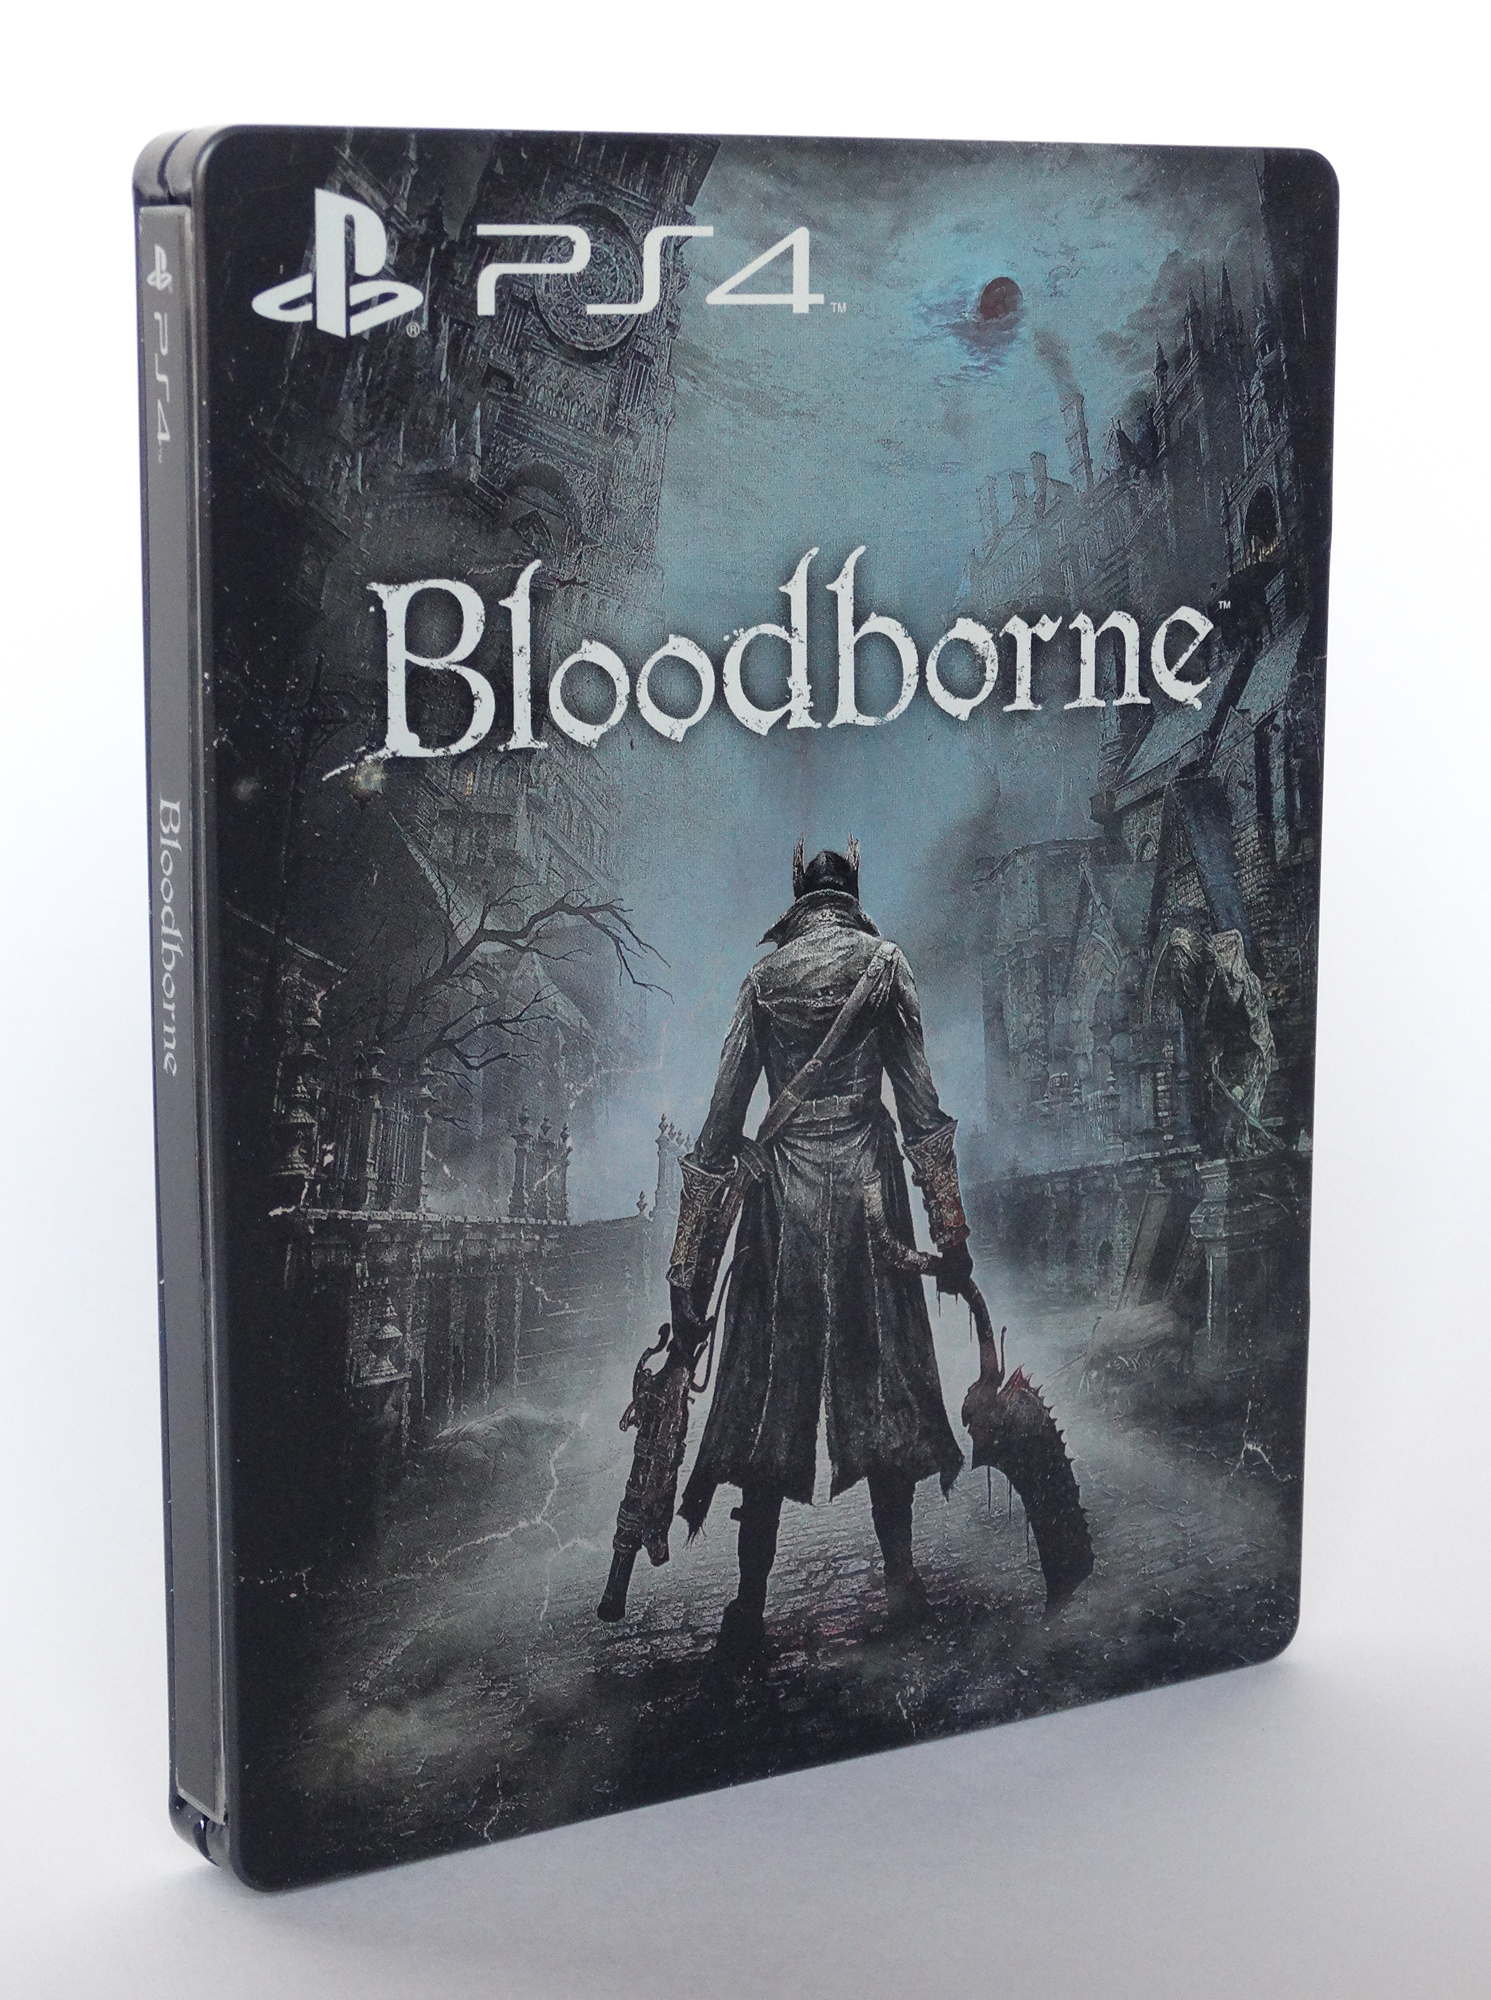 Bloodborne купить ps4. Bloodborne Steelbook Edition. Бладборн коллекционное издание. Bloodborne ps4 лимитированная. Ps4 Bloodborne Edition.